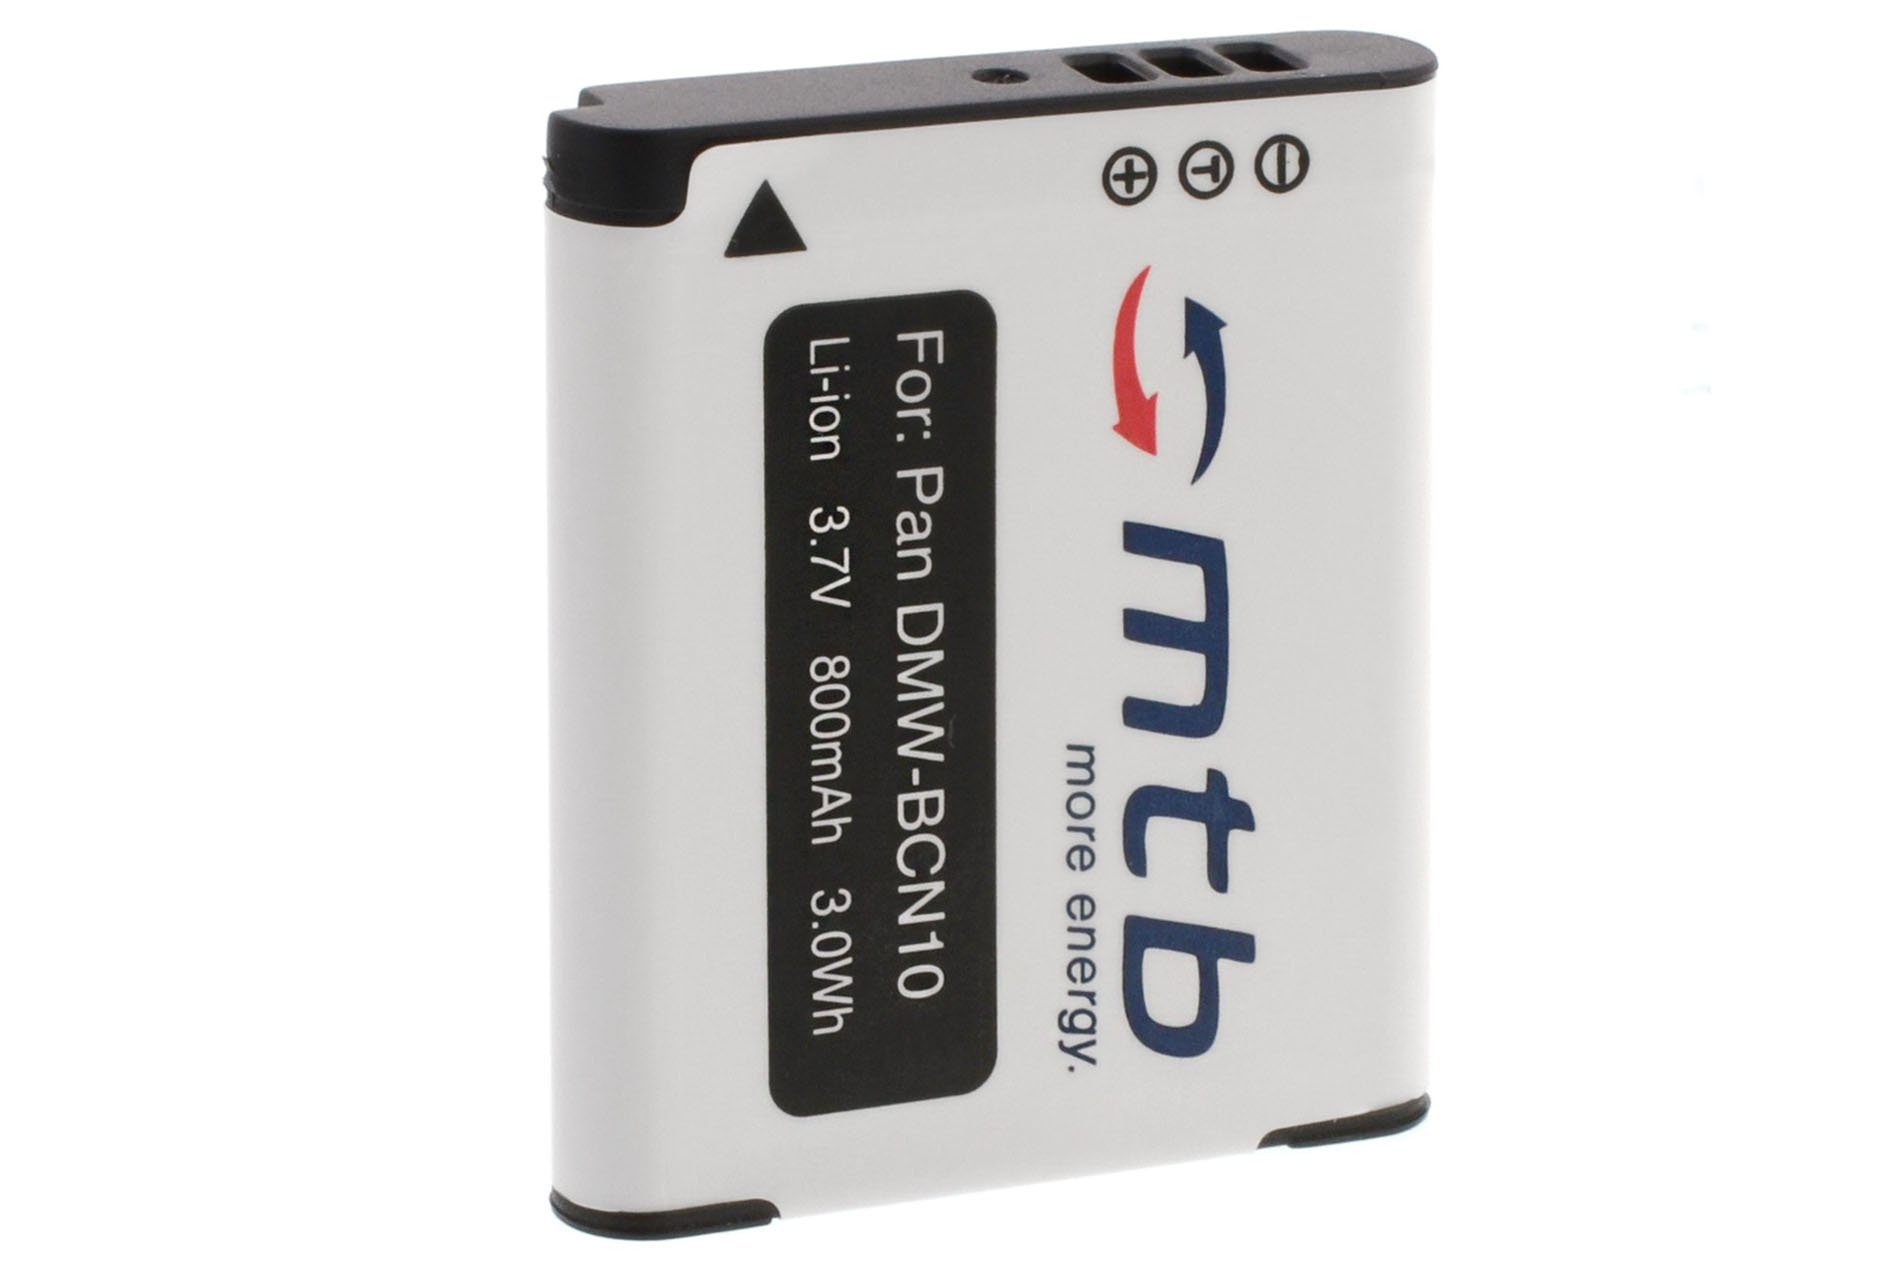 mtb more energy Lumix mit Panasonic für: [BAT-390 kompatibel EOL - mAh Li-Ion] DMC-LF1… passend V), 800 (3,7 - Kamera-Akku Panasonic BCN10 Akku-Typ